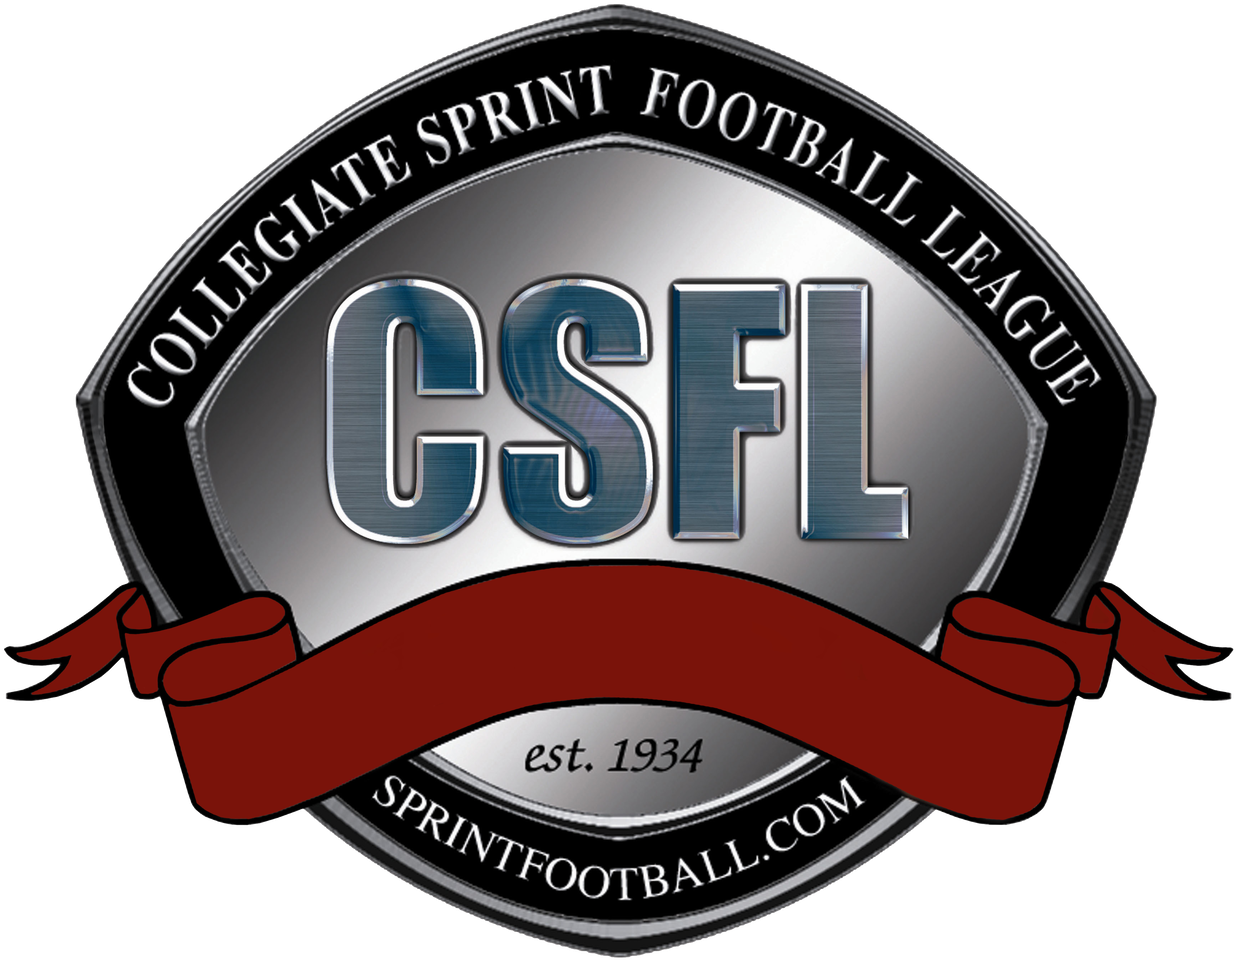 C S F L Collegiate Sprint Football League Logo PNG